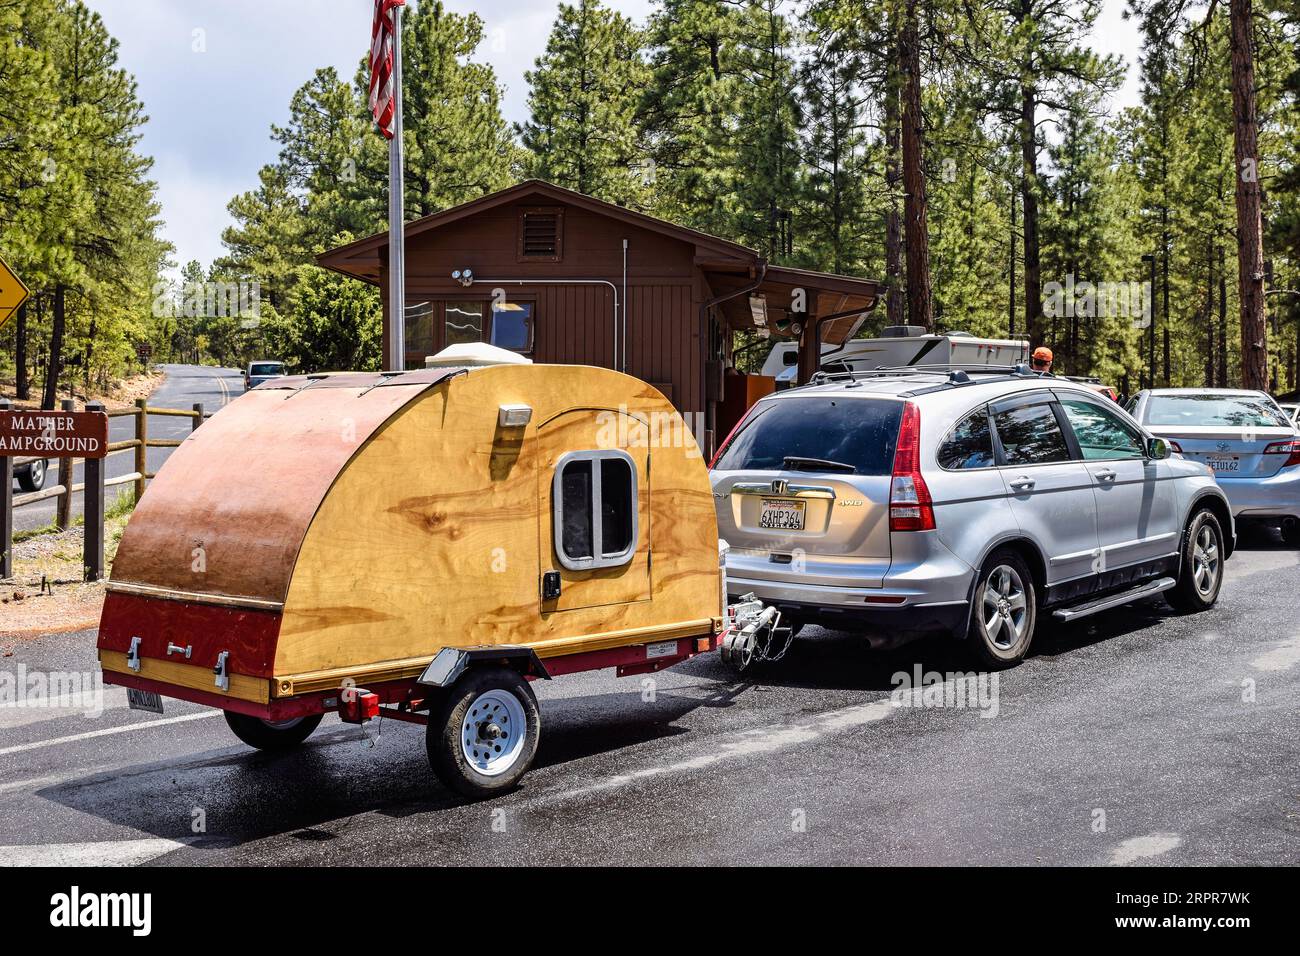 GRAND CANYON NATIONAL PARK, USA - MAY 29, 2015: Self-made teardrop camping trailer at a Grand Canyon campground. Camping is a popular way to visit thi Stock Photo